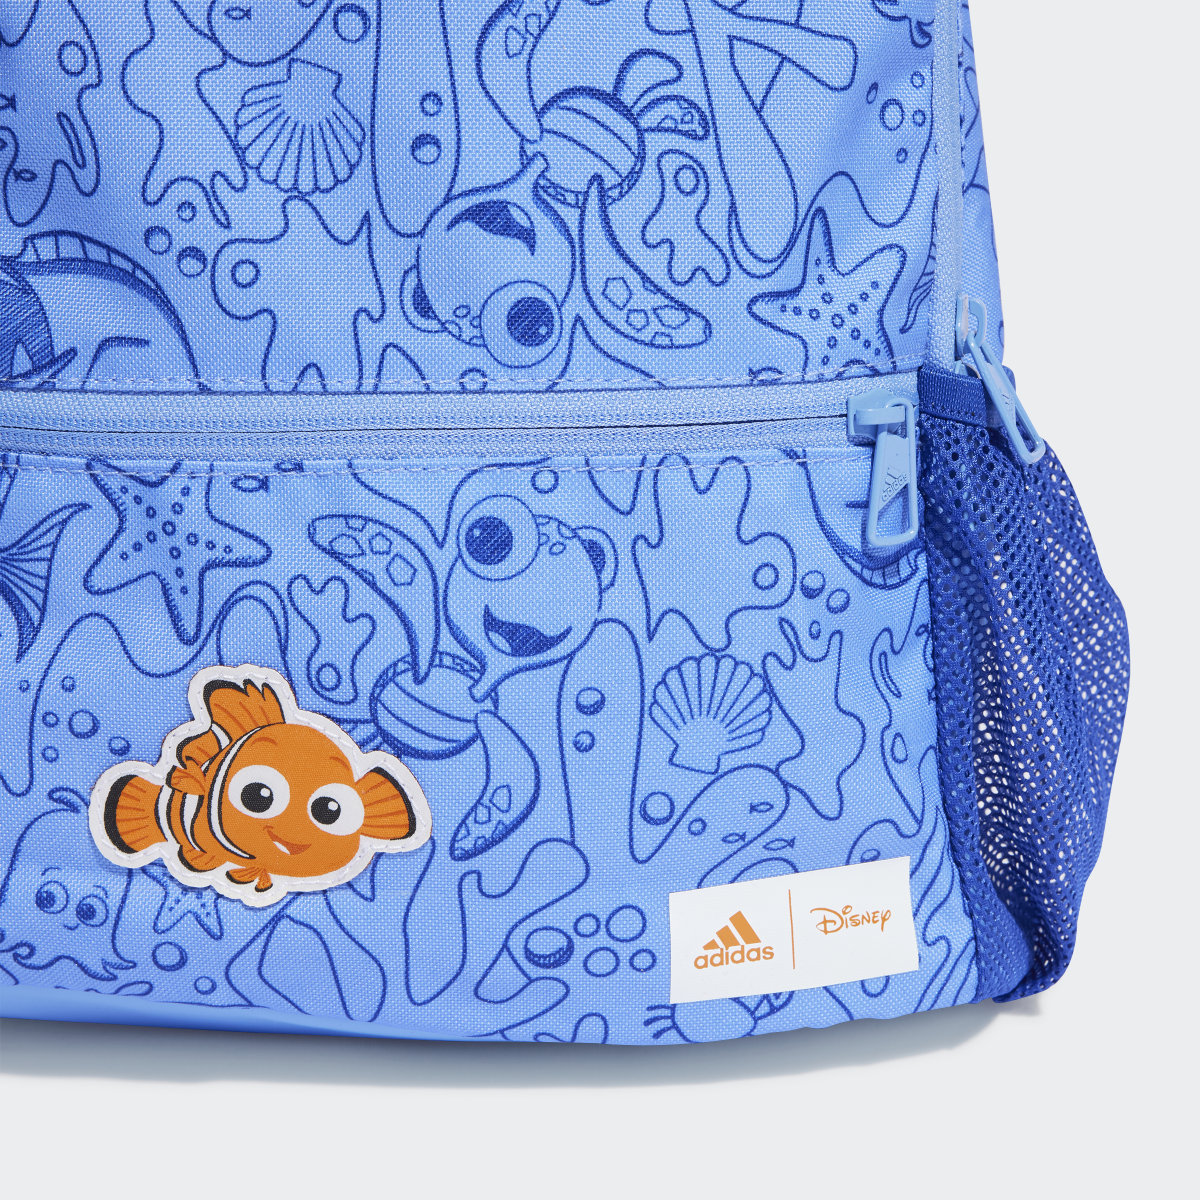 Adidas Mochila adidas x Disney Pixar Finding Nemo. 6